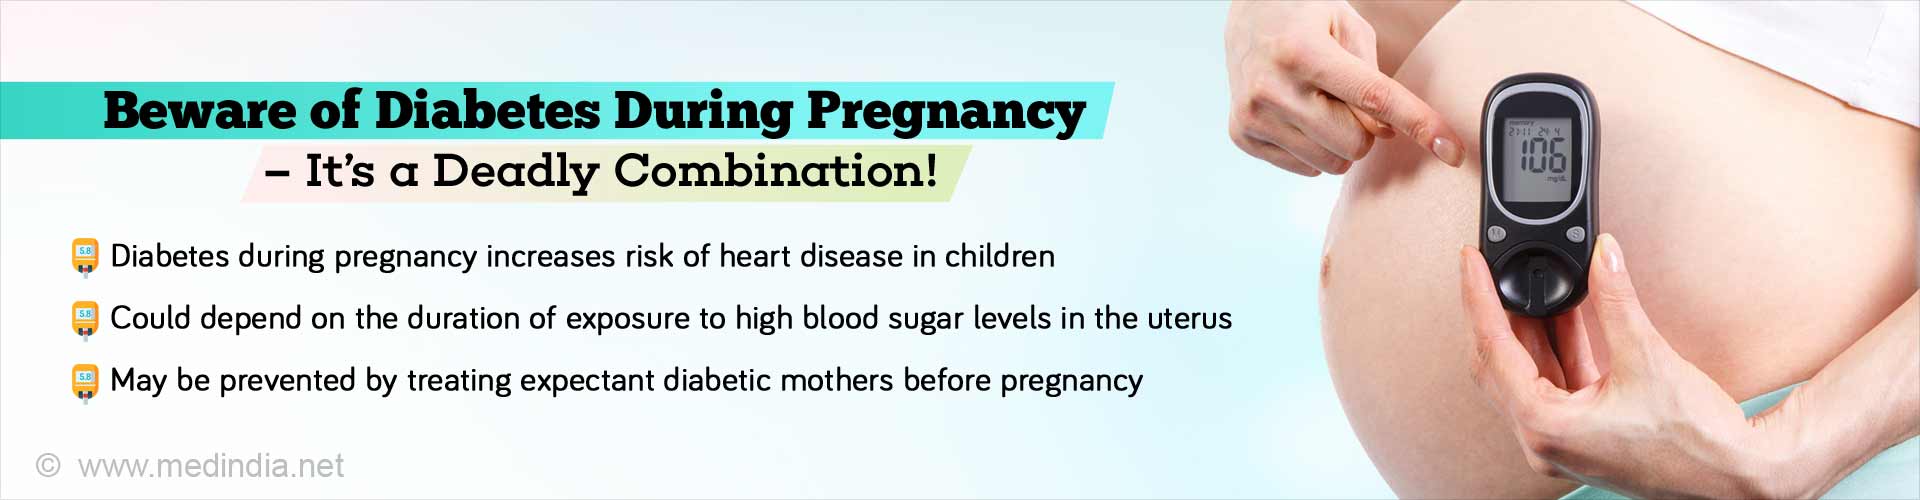 Beware of diabetes during pregnancy 